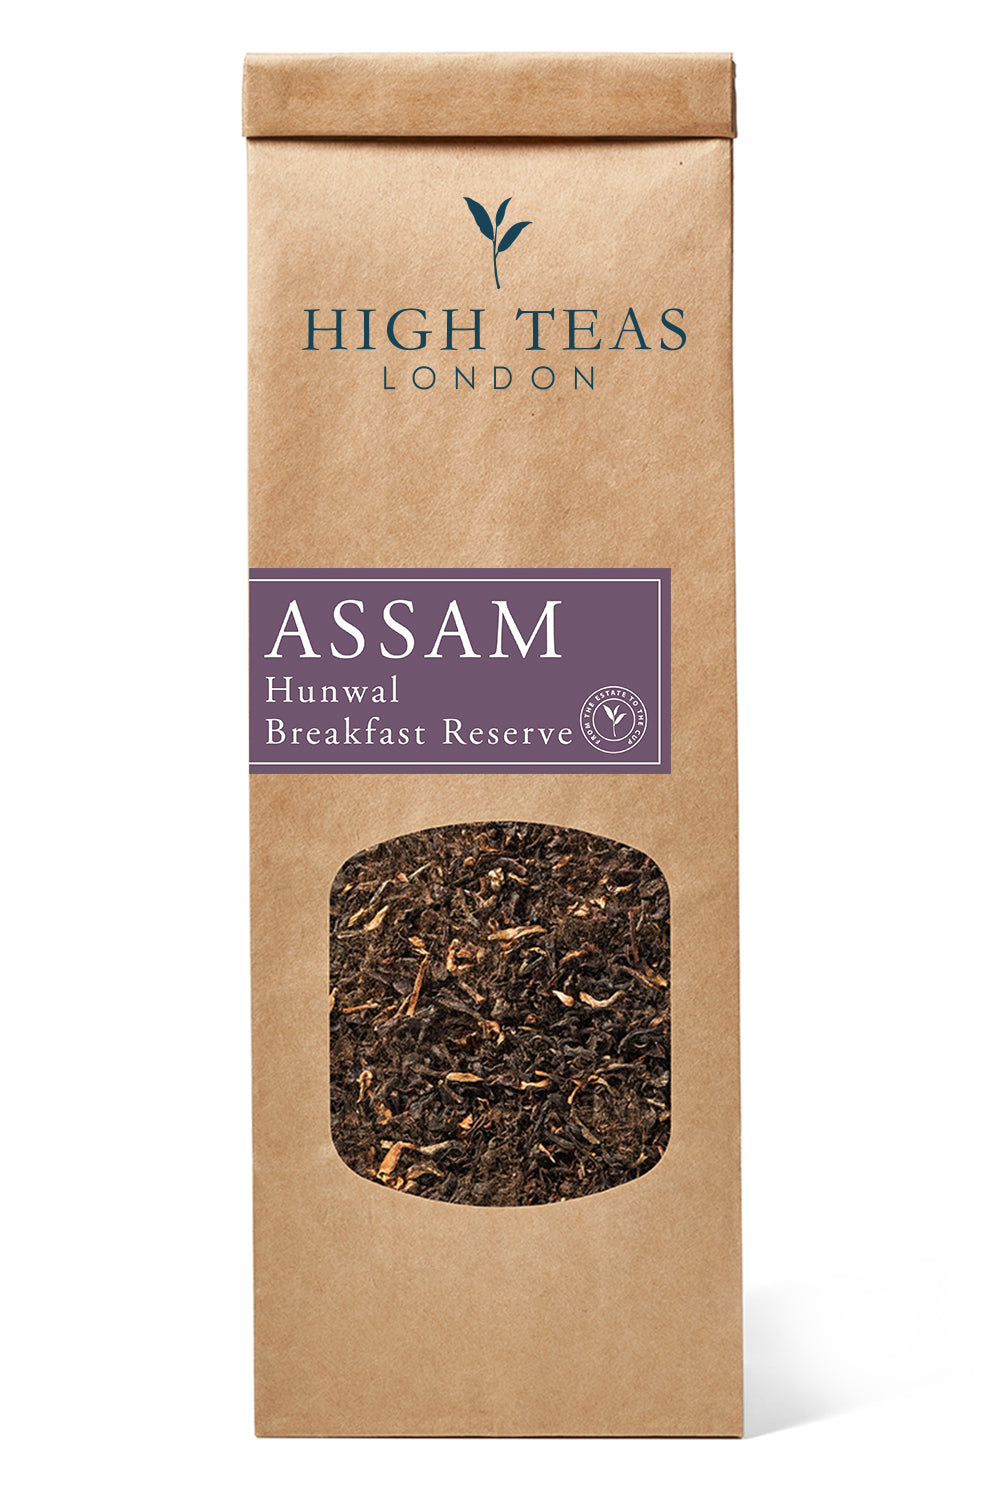 Assam Hunwal Breakfast Reserve-50g-Loose Leaf Tea-High Teas